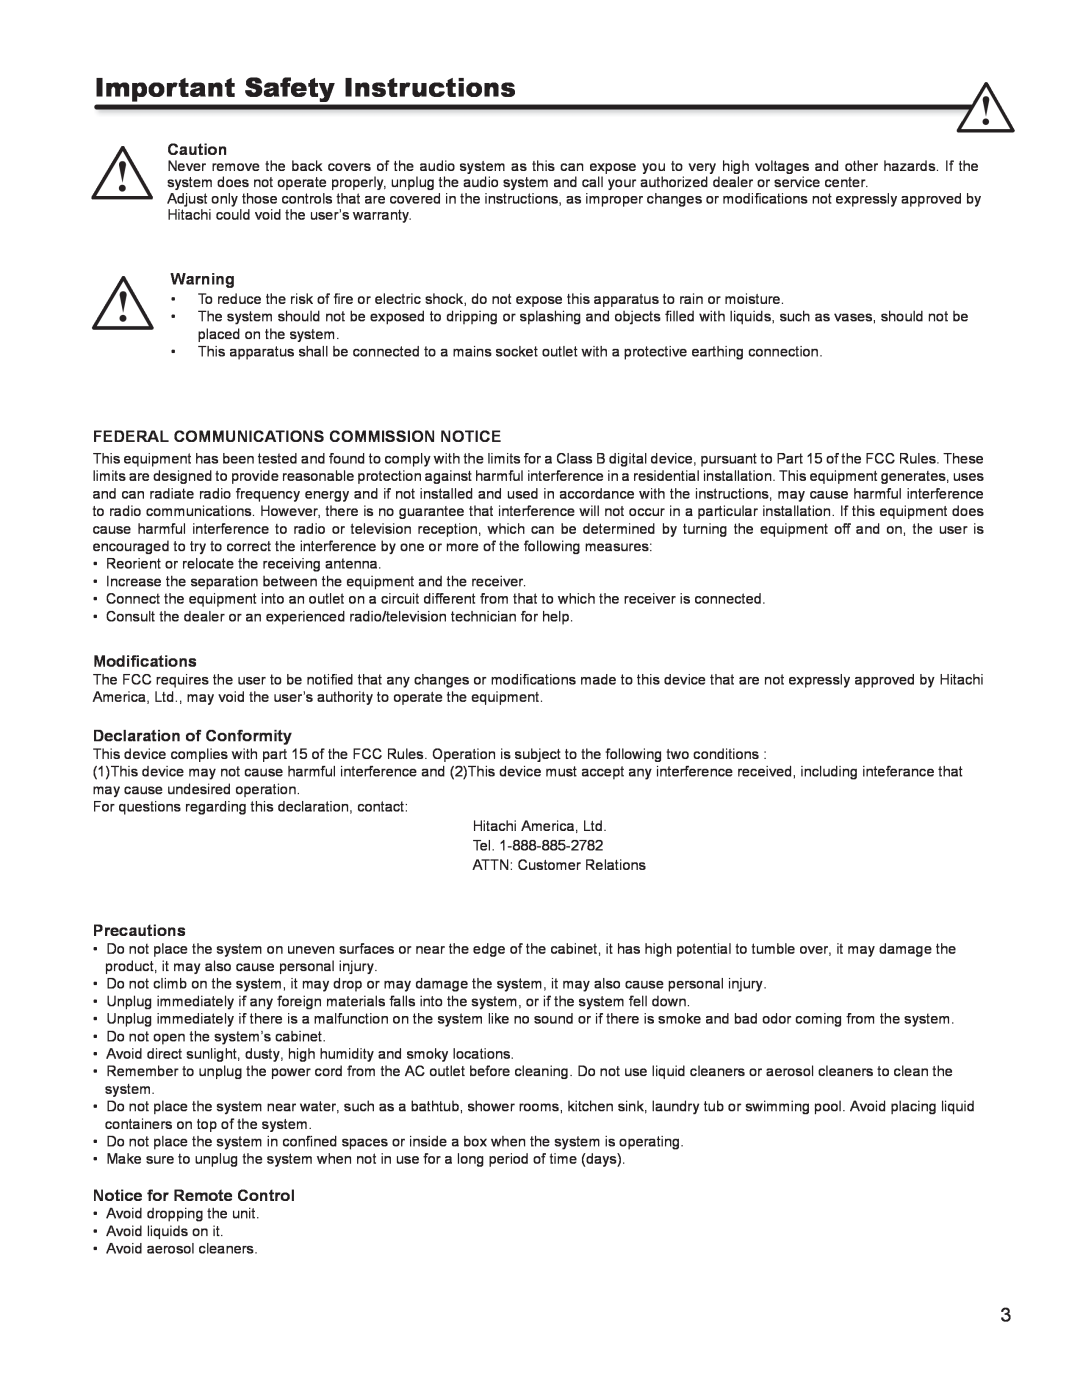 Hitachi SBW100 Federal Communications Commission Notice, Modiﬁcations, Declaration of Conformity, Precautions 